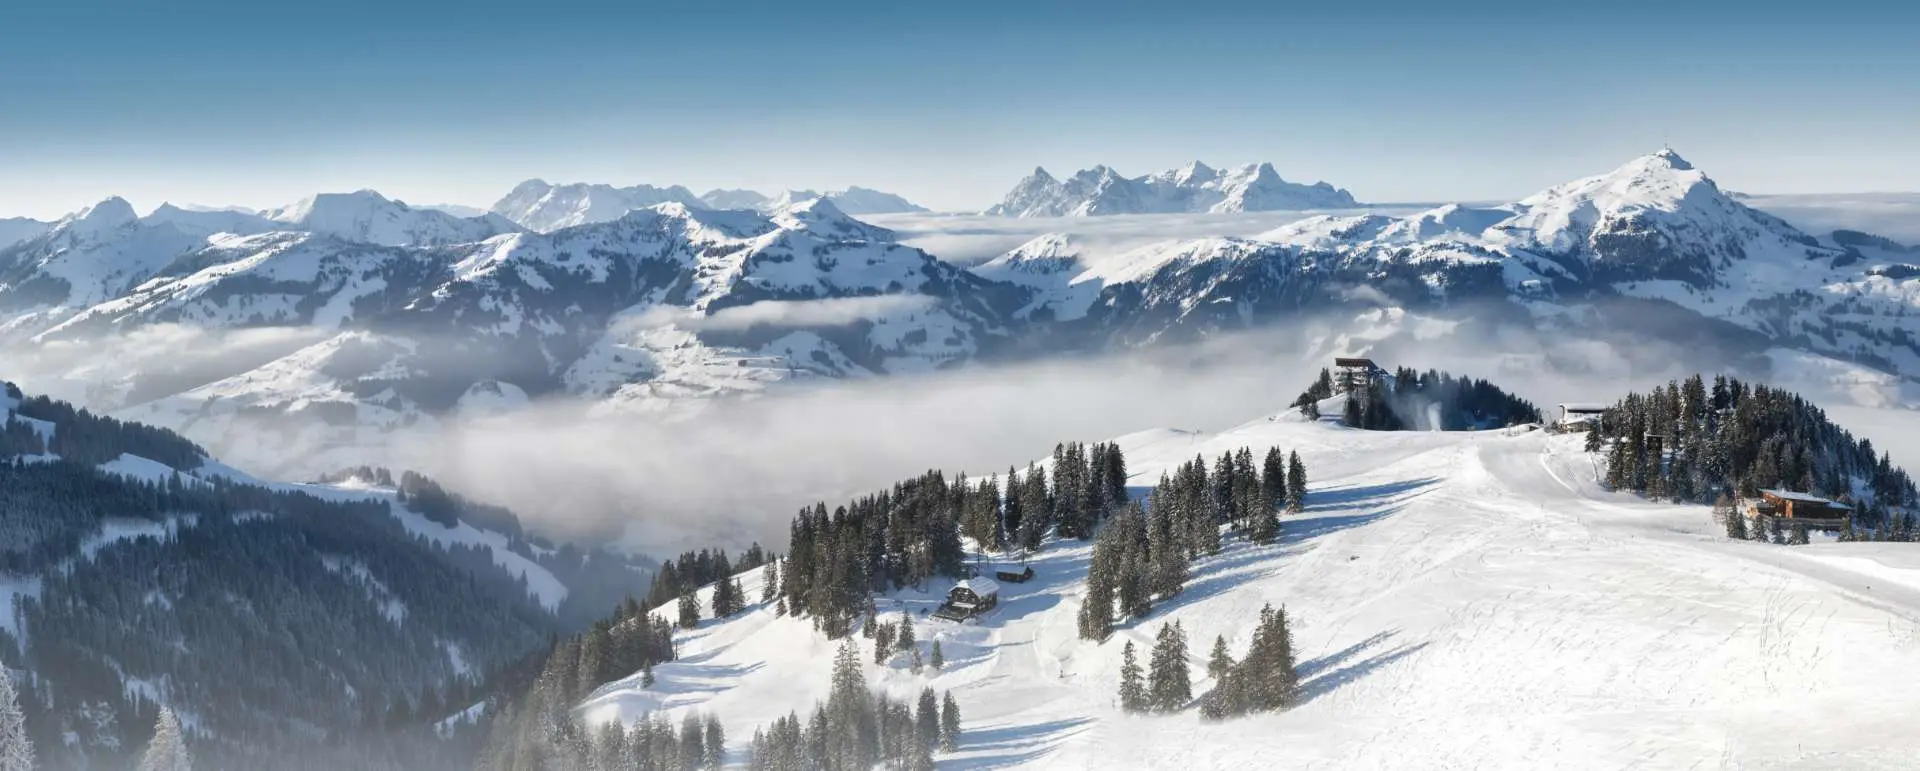 Kitzbühel Alps - the destination for wellness